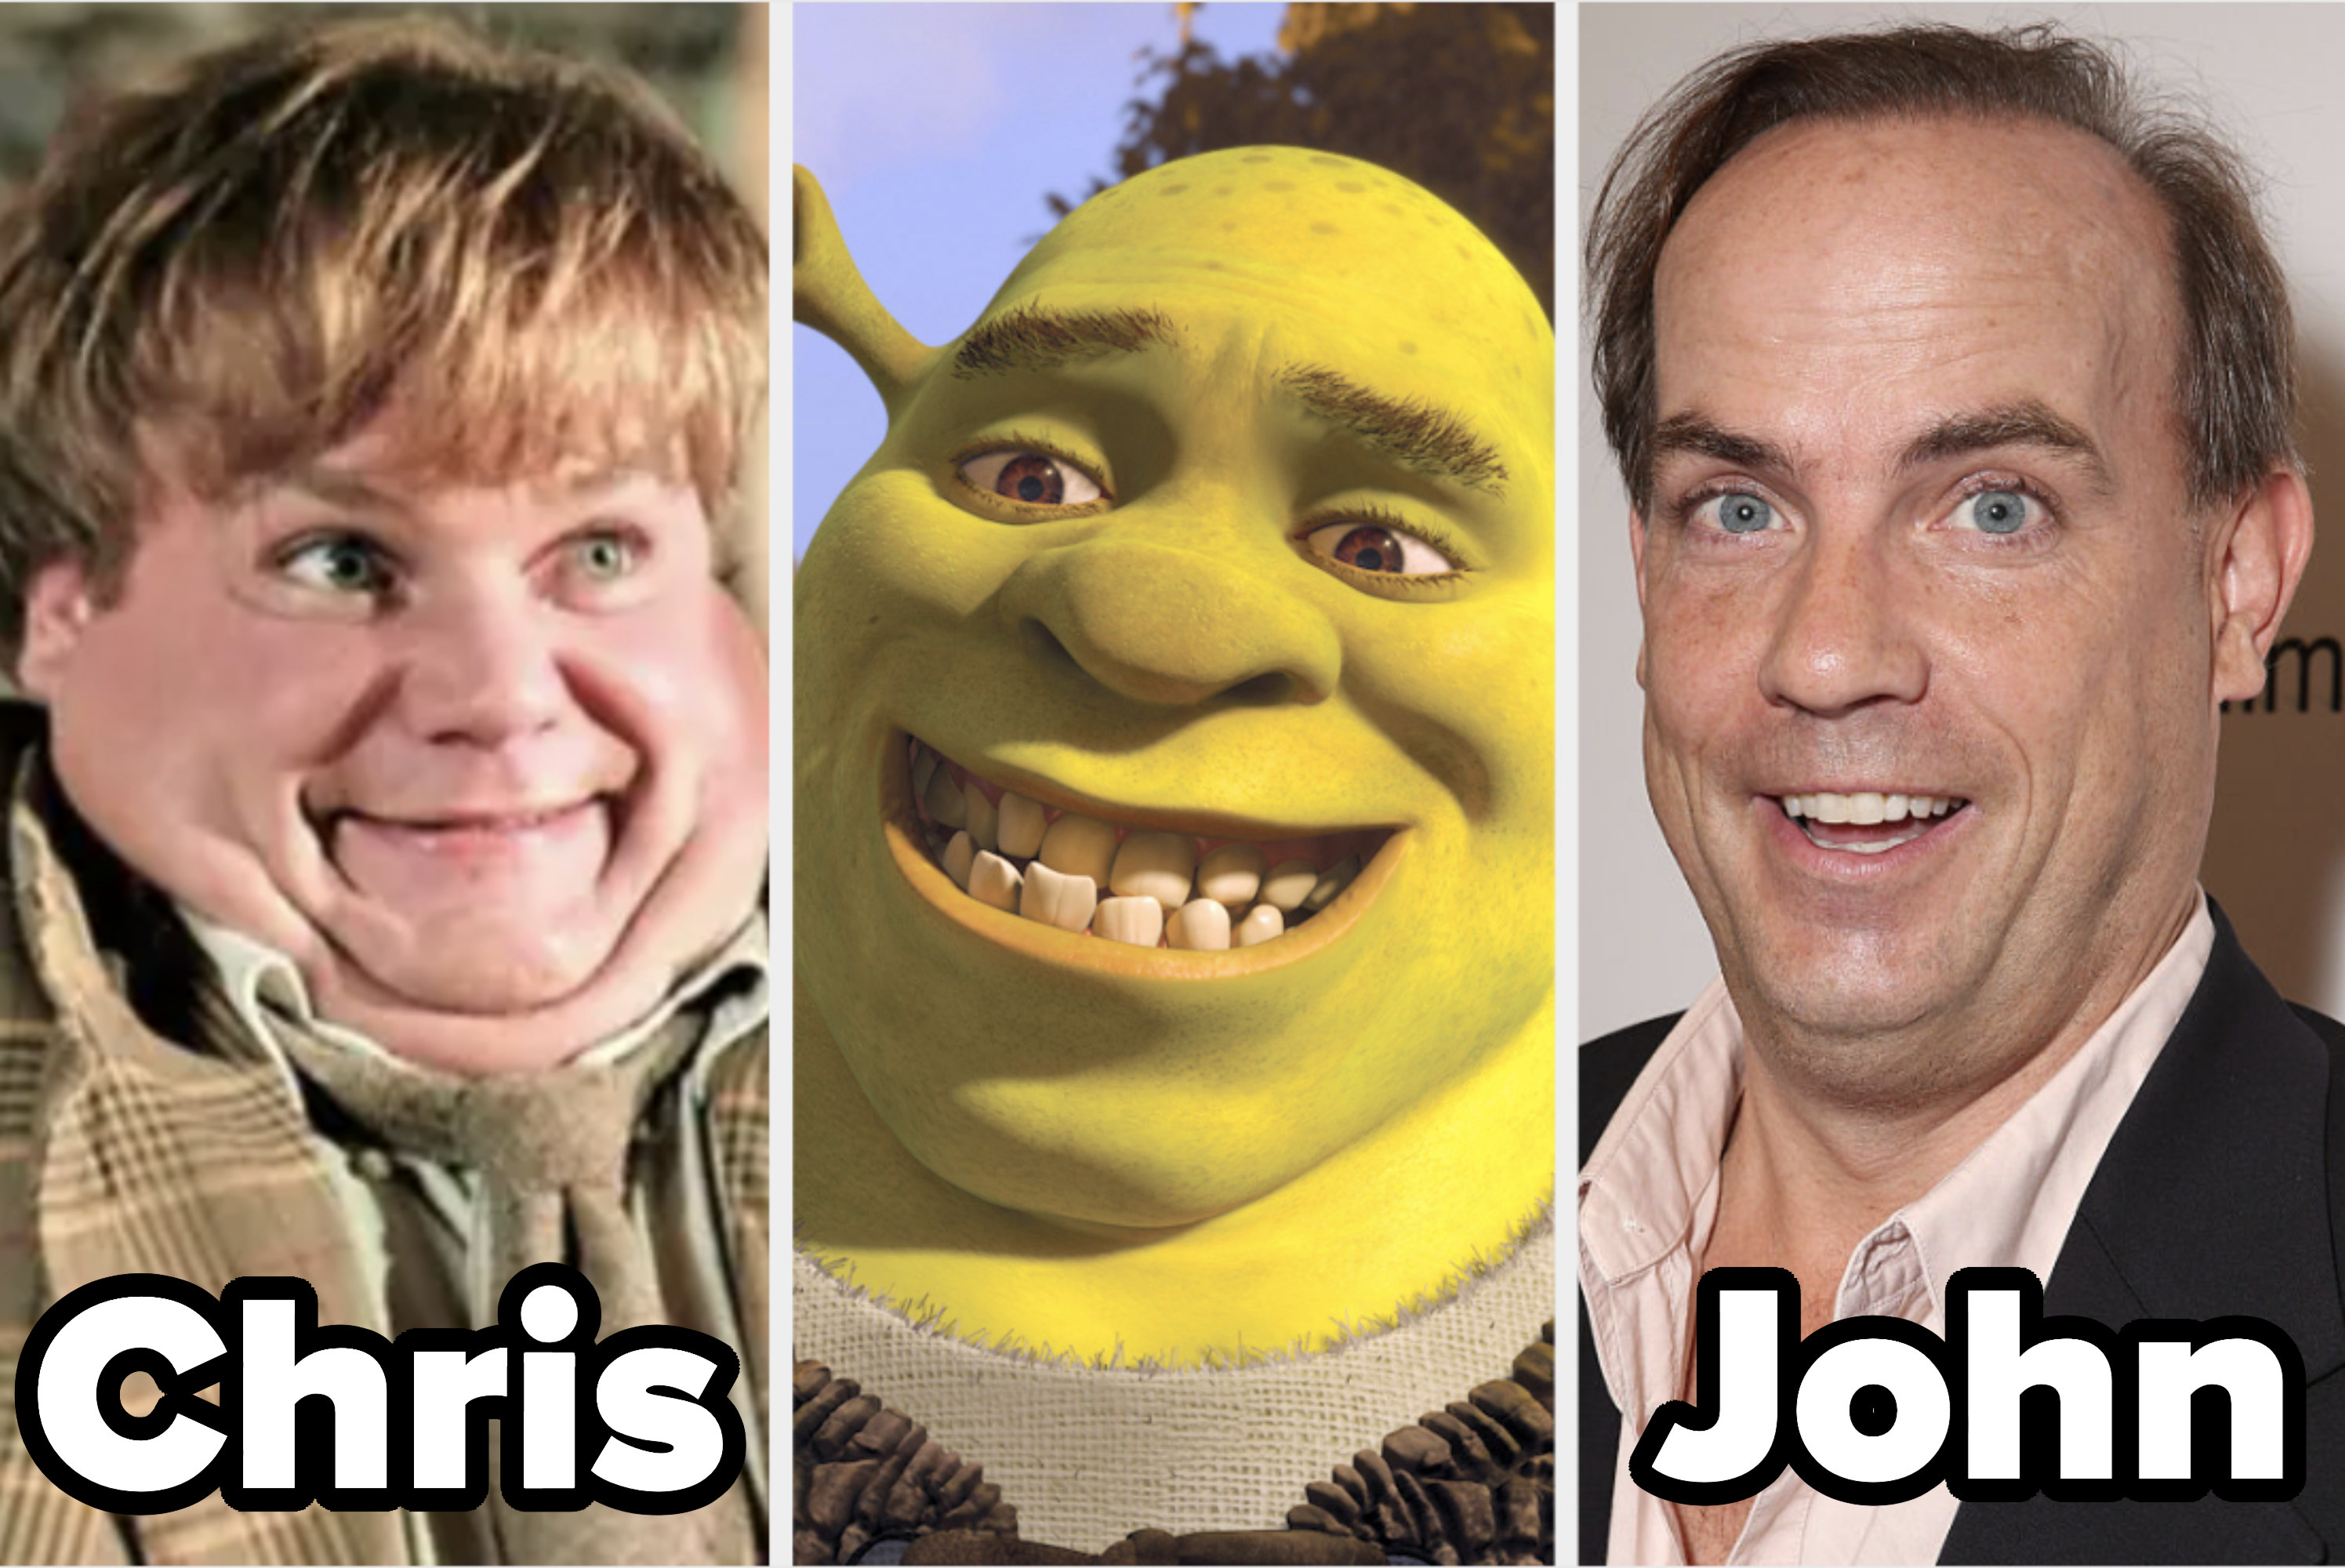 Chris and John Farley and Shrek